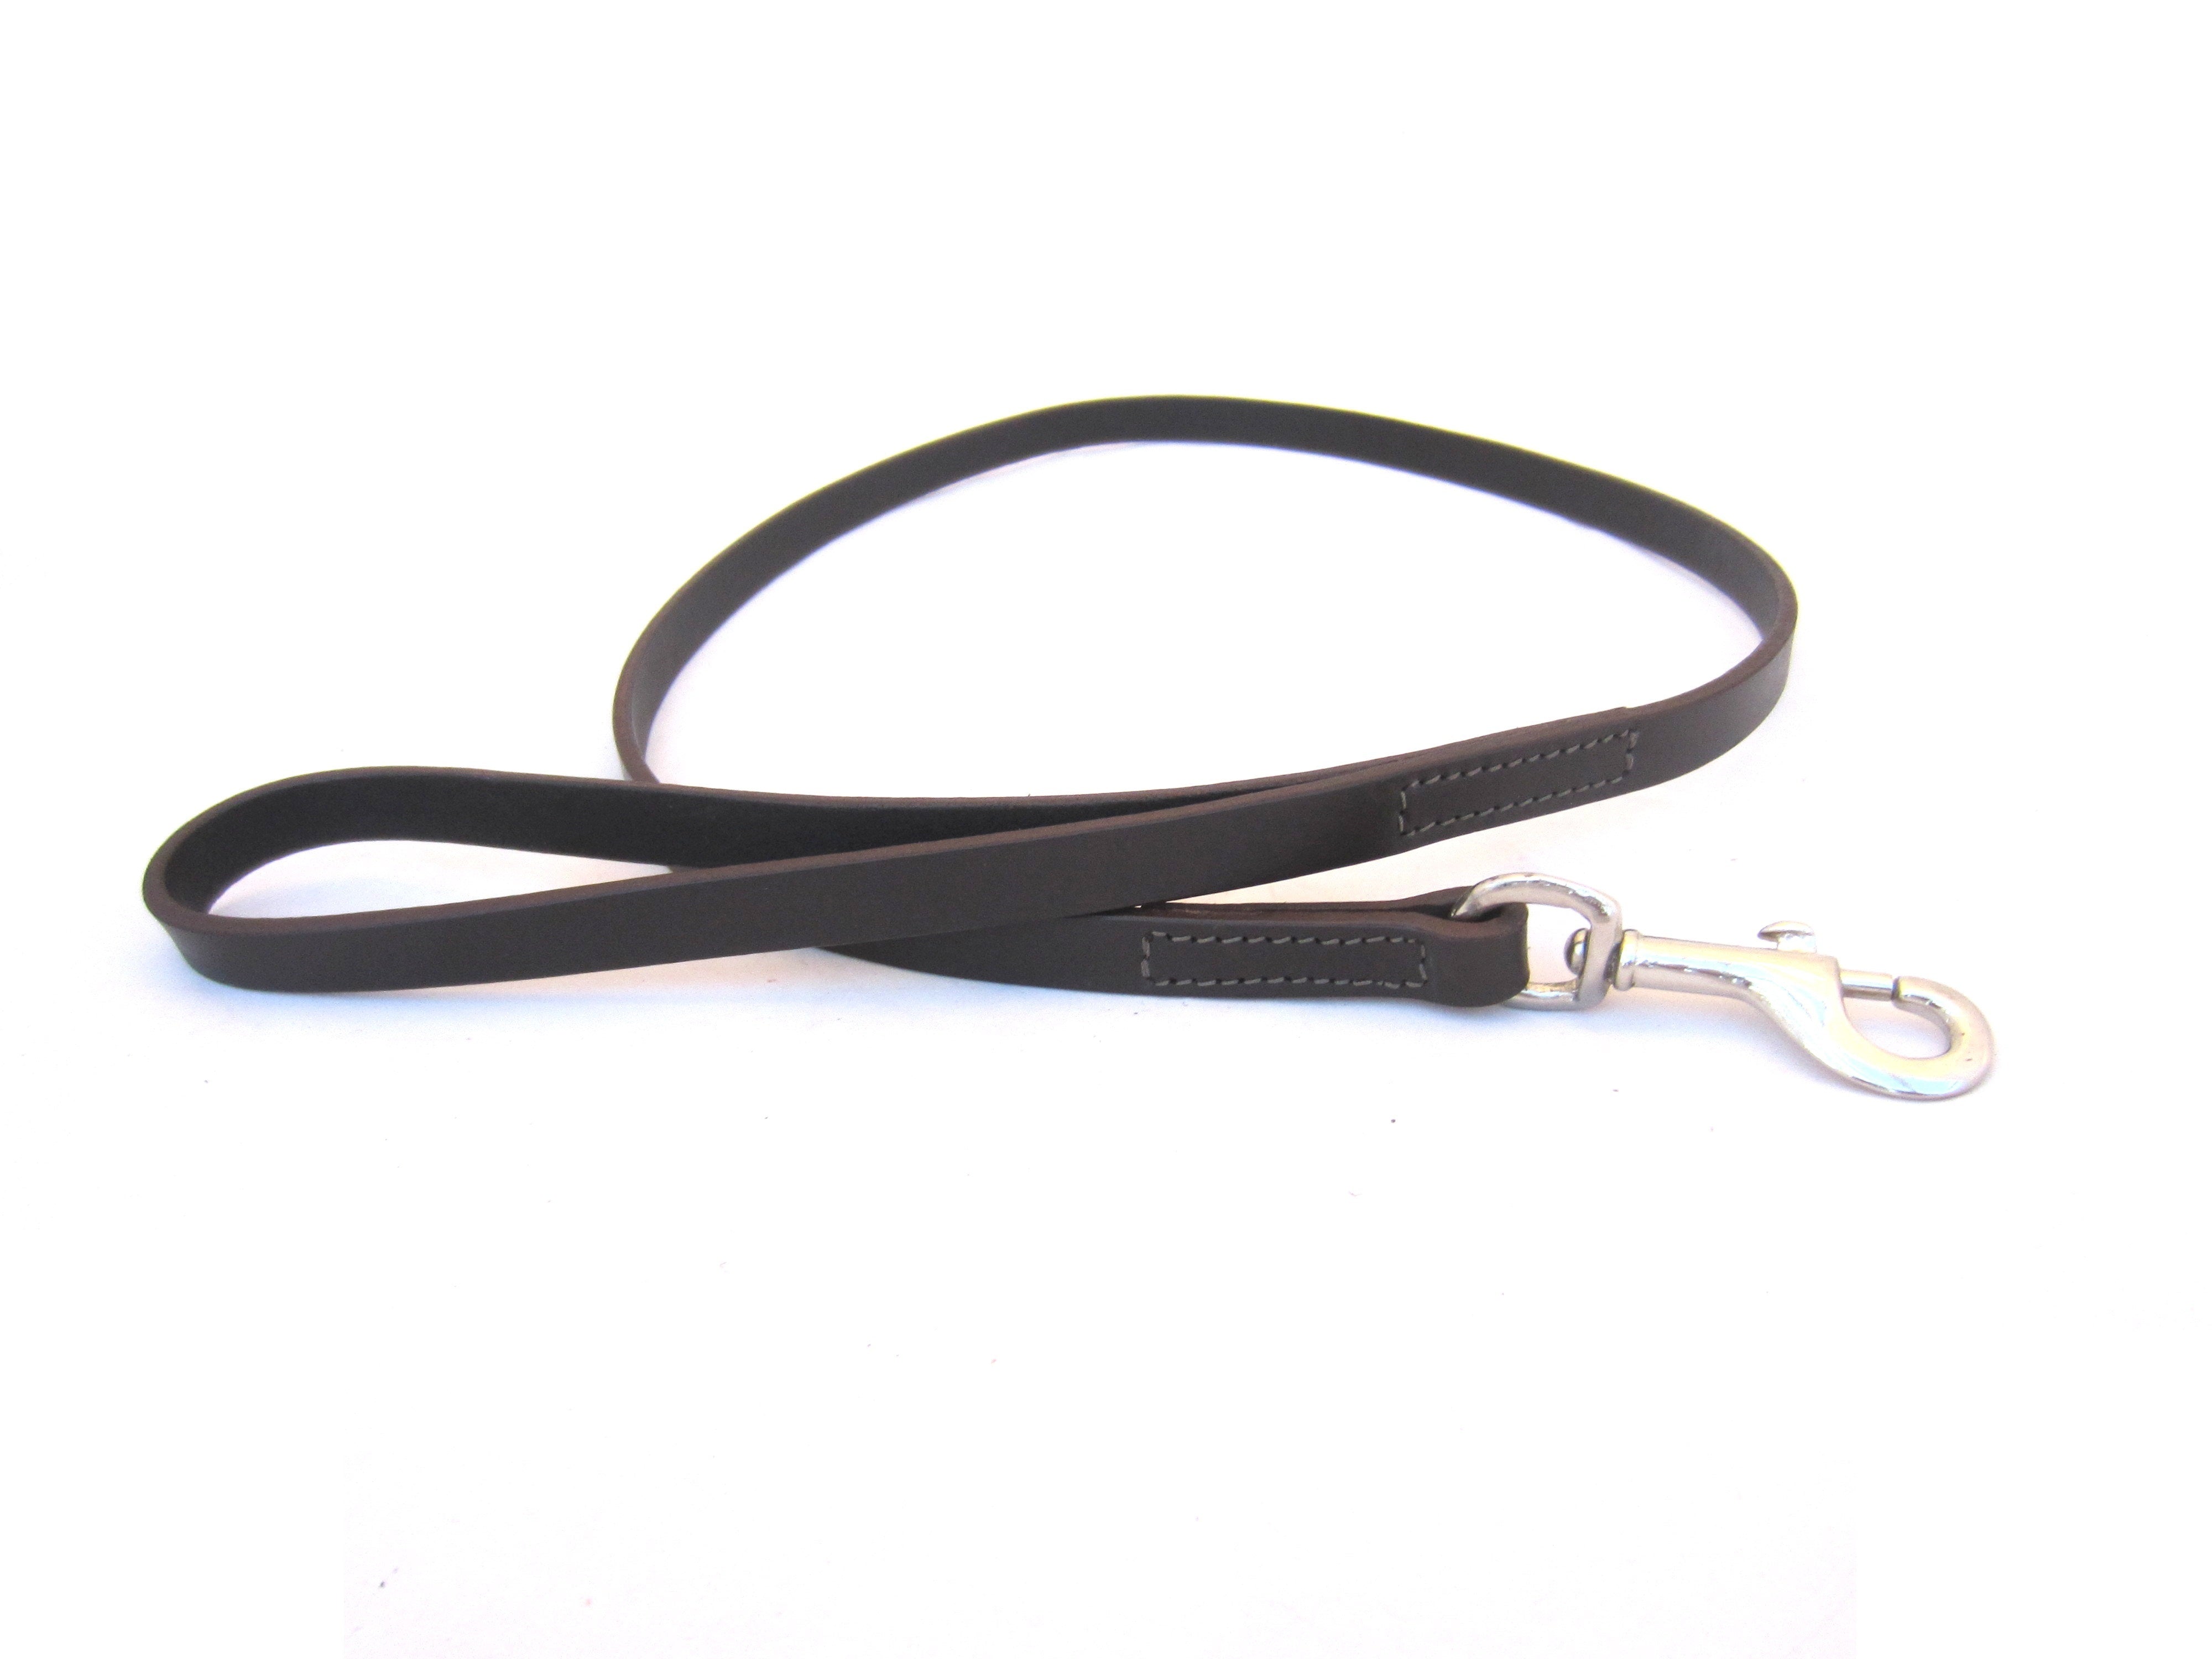 Short flat leather dog leash "Short Flat" 110 cm length